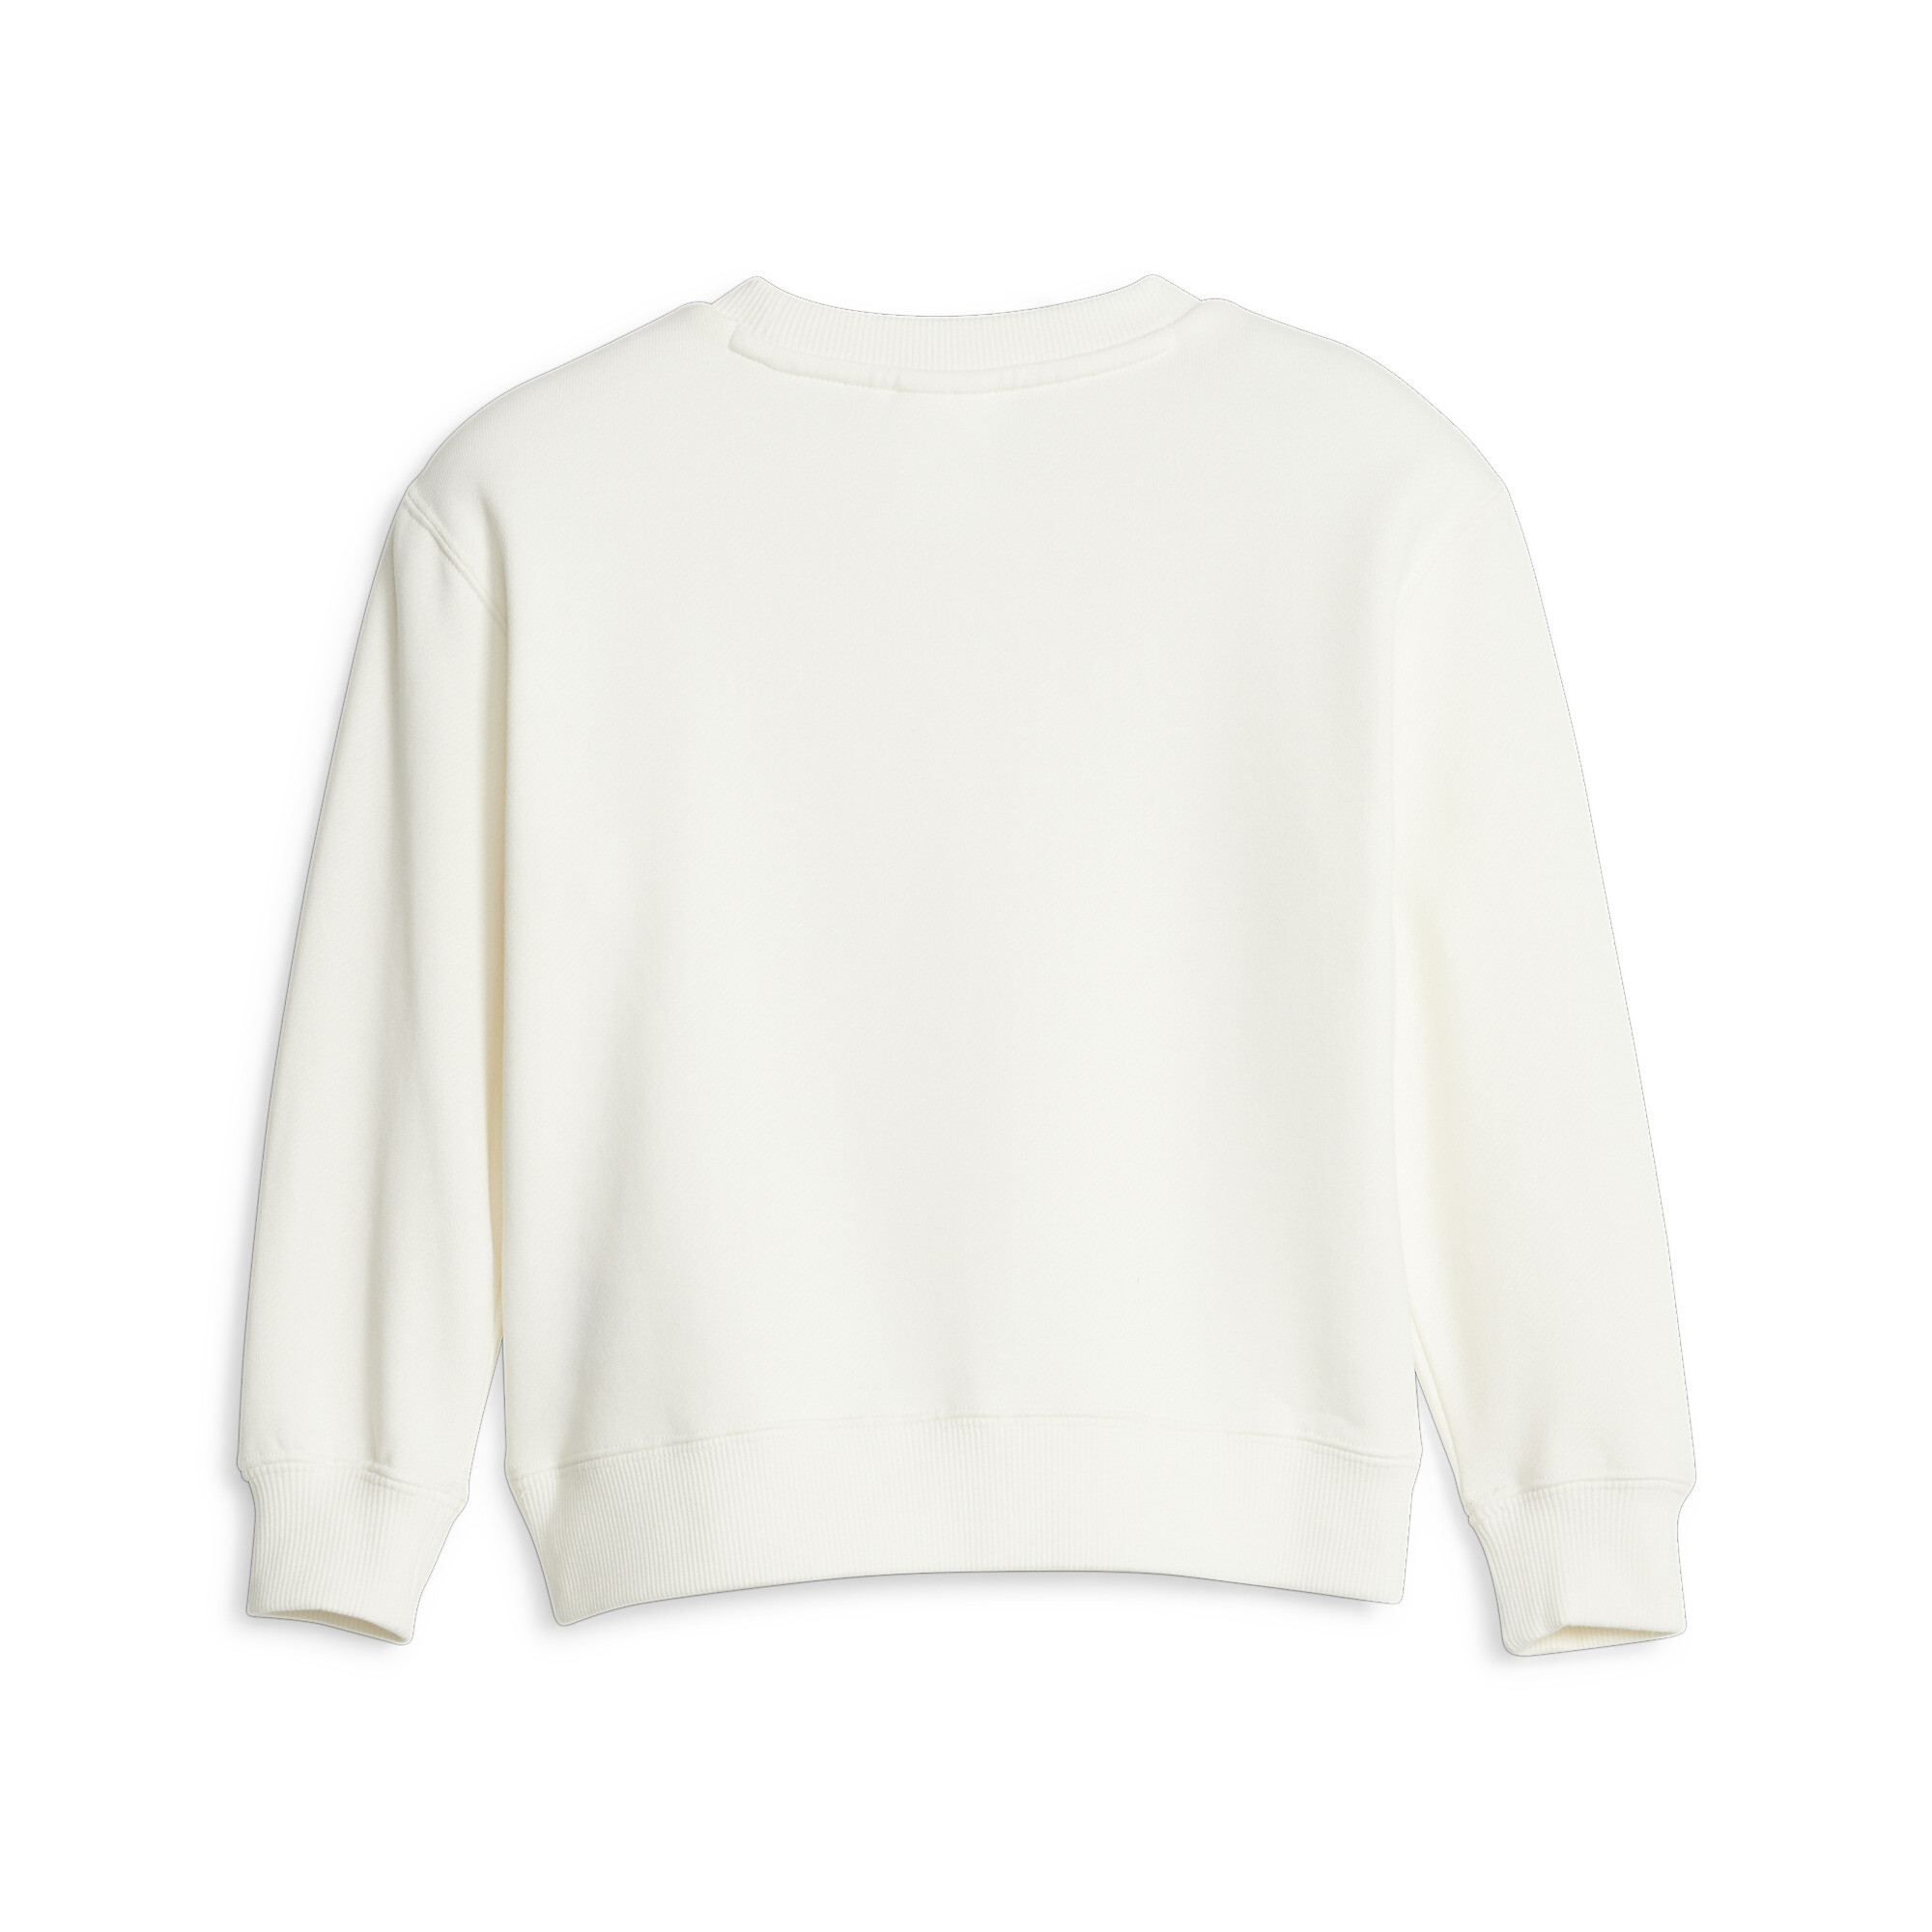 PUMA X LIBERTY Sweatshirt In White, Size 11-12 Youth